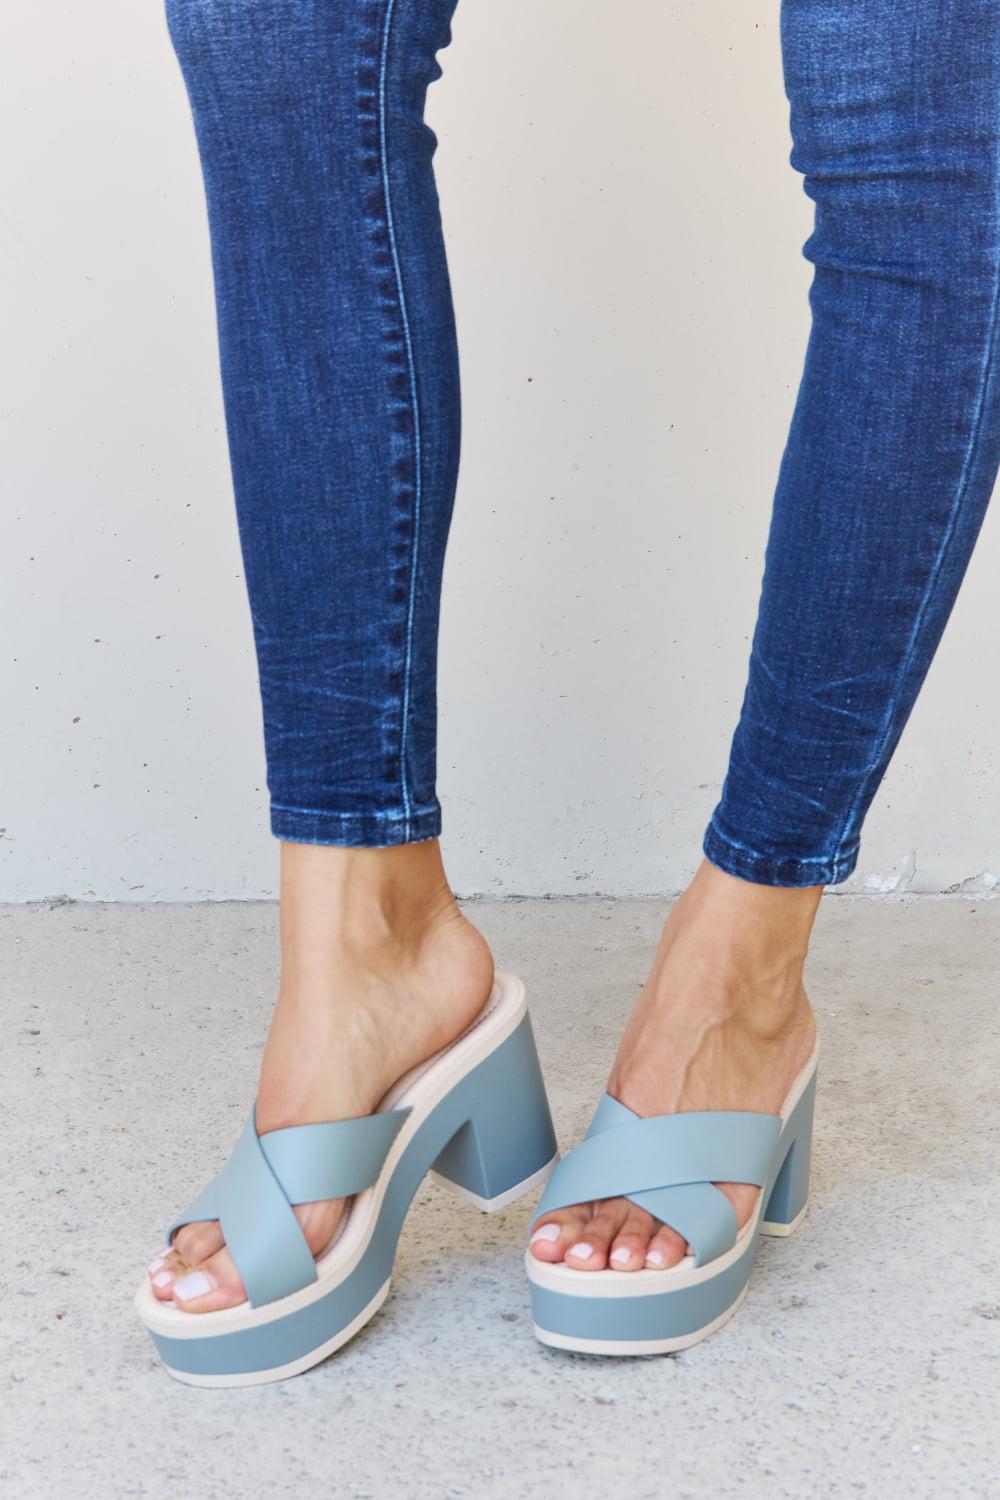 Lib 8 Inch Super Heels Peep Toe Ankle Strap Suede Platform Sandals - Blue  in Sexy Heels & Platforms - $74.79